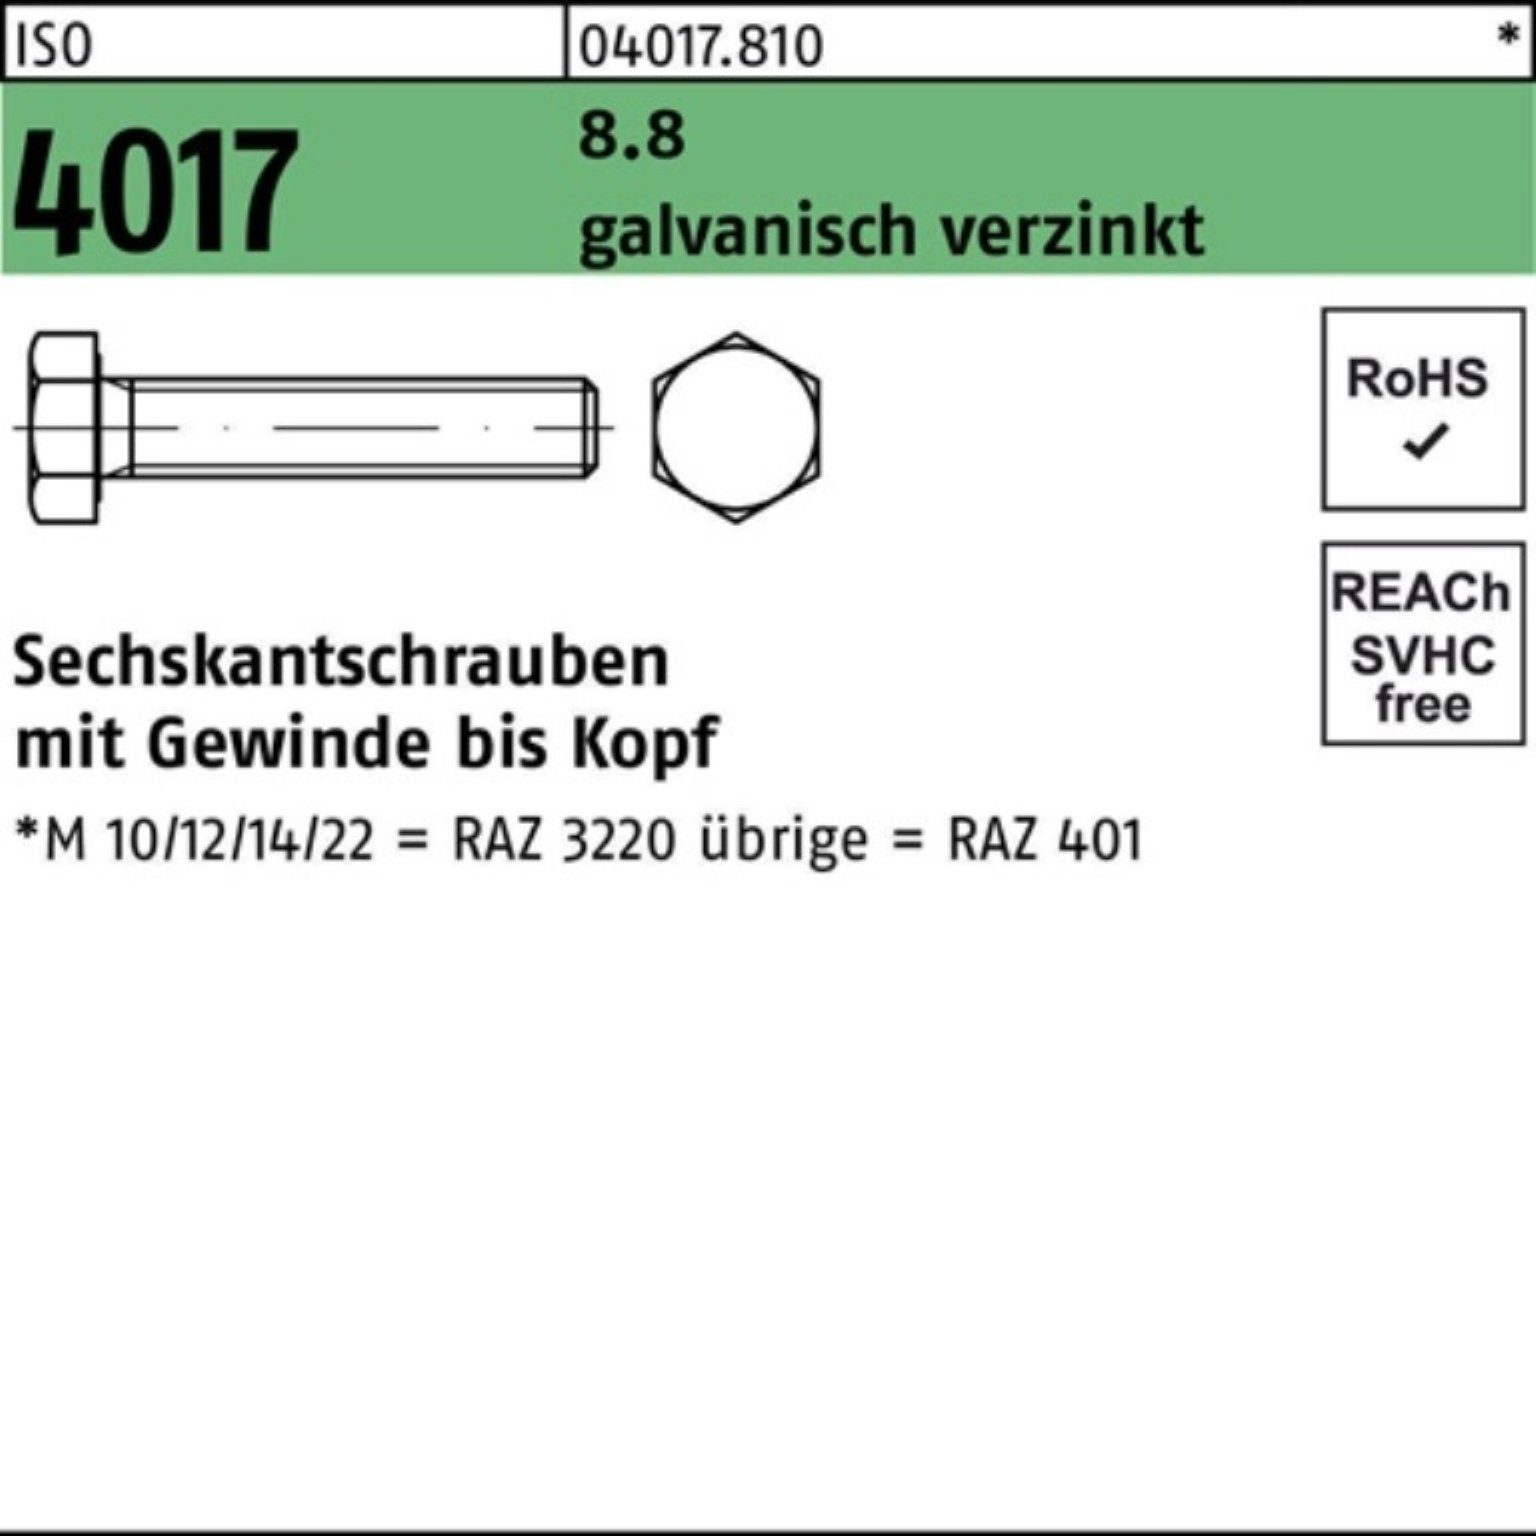 Bufab Sechskantschraube 100er Pack Sechskantschraube 4017 galv.verz. St ISO M36x 8.8 1 280 VG